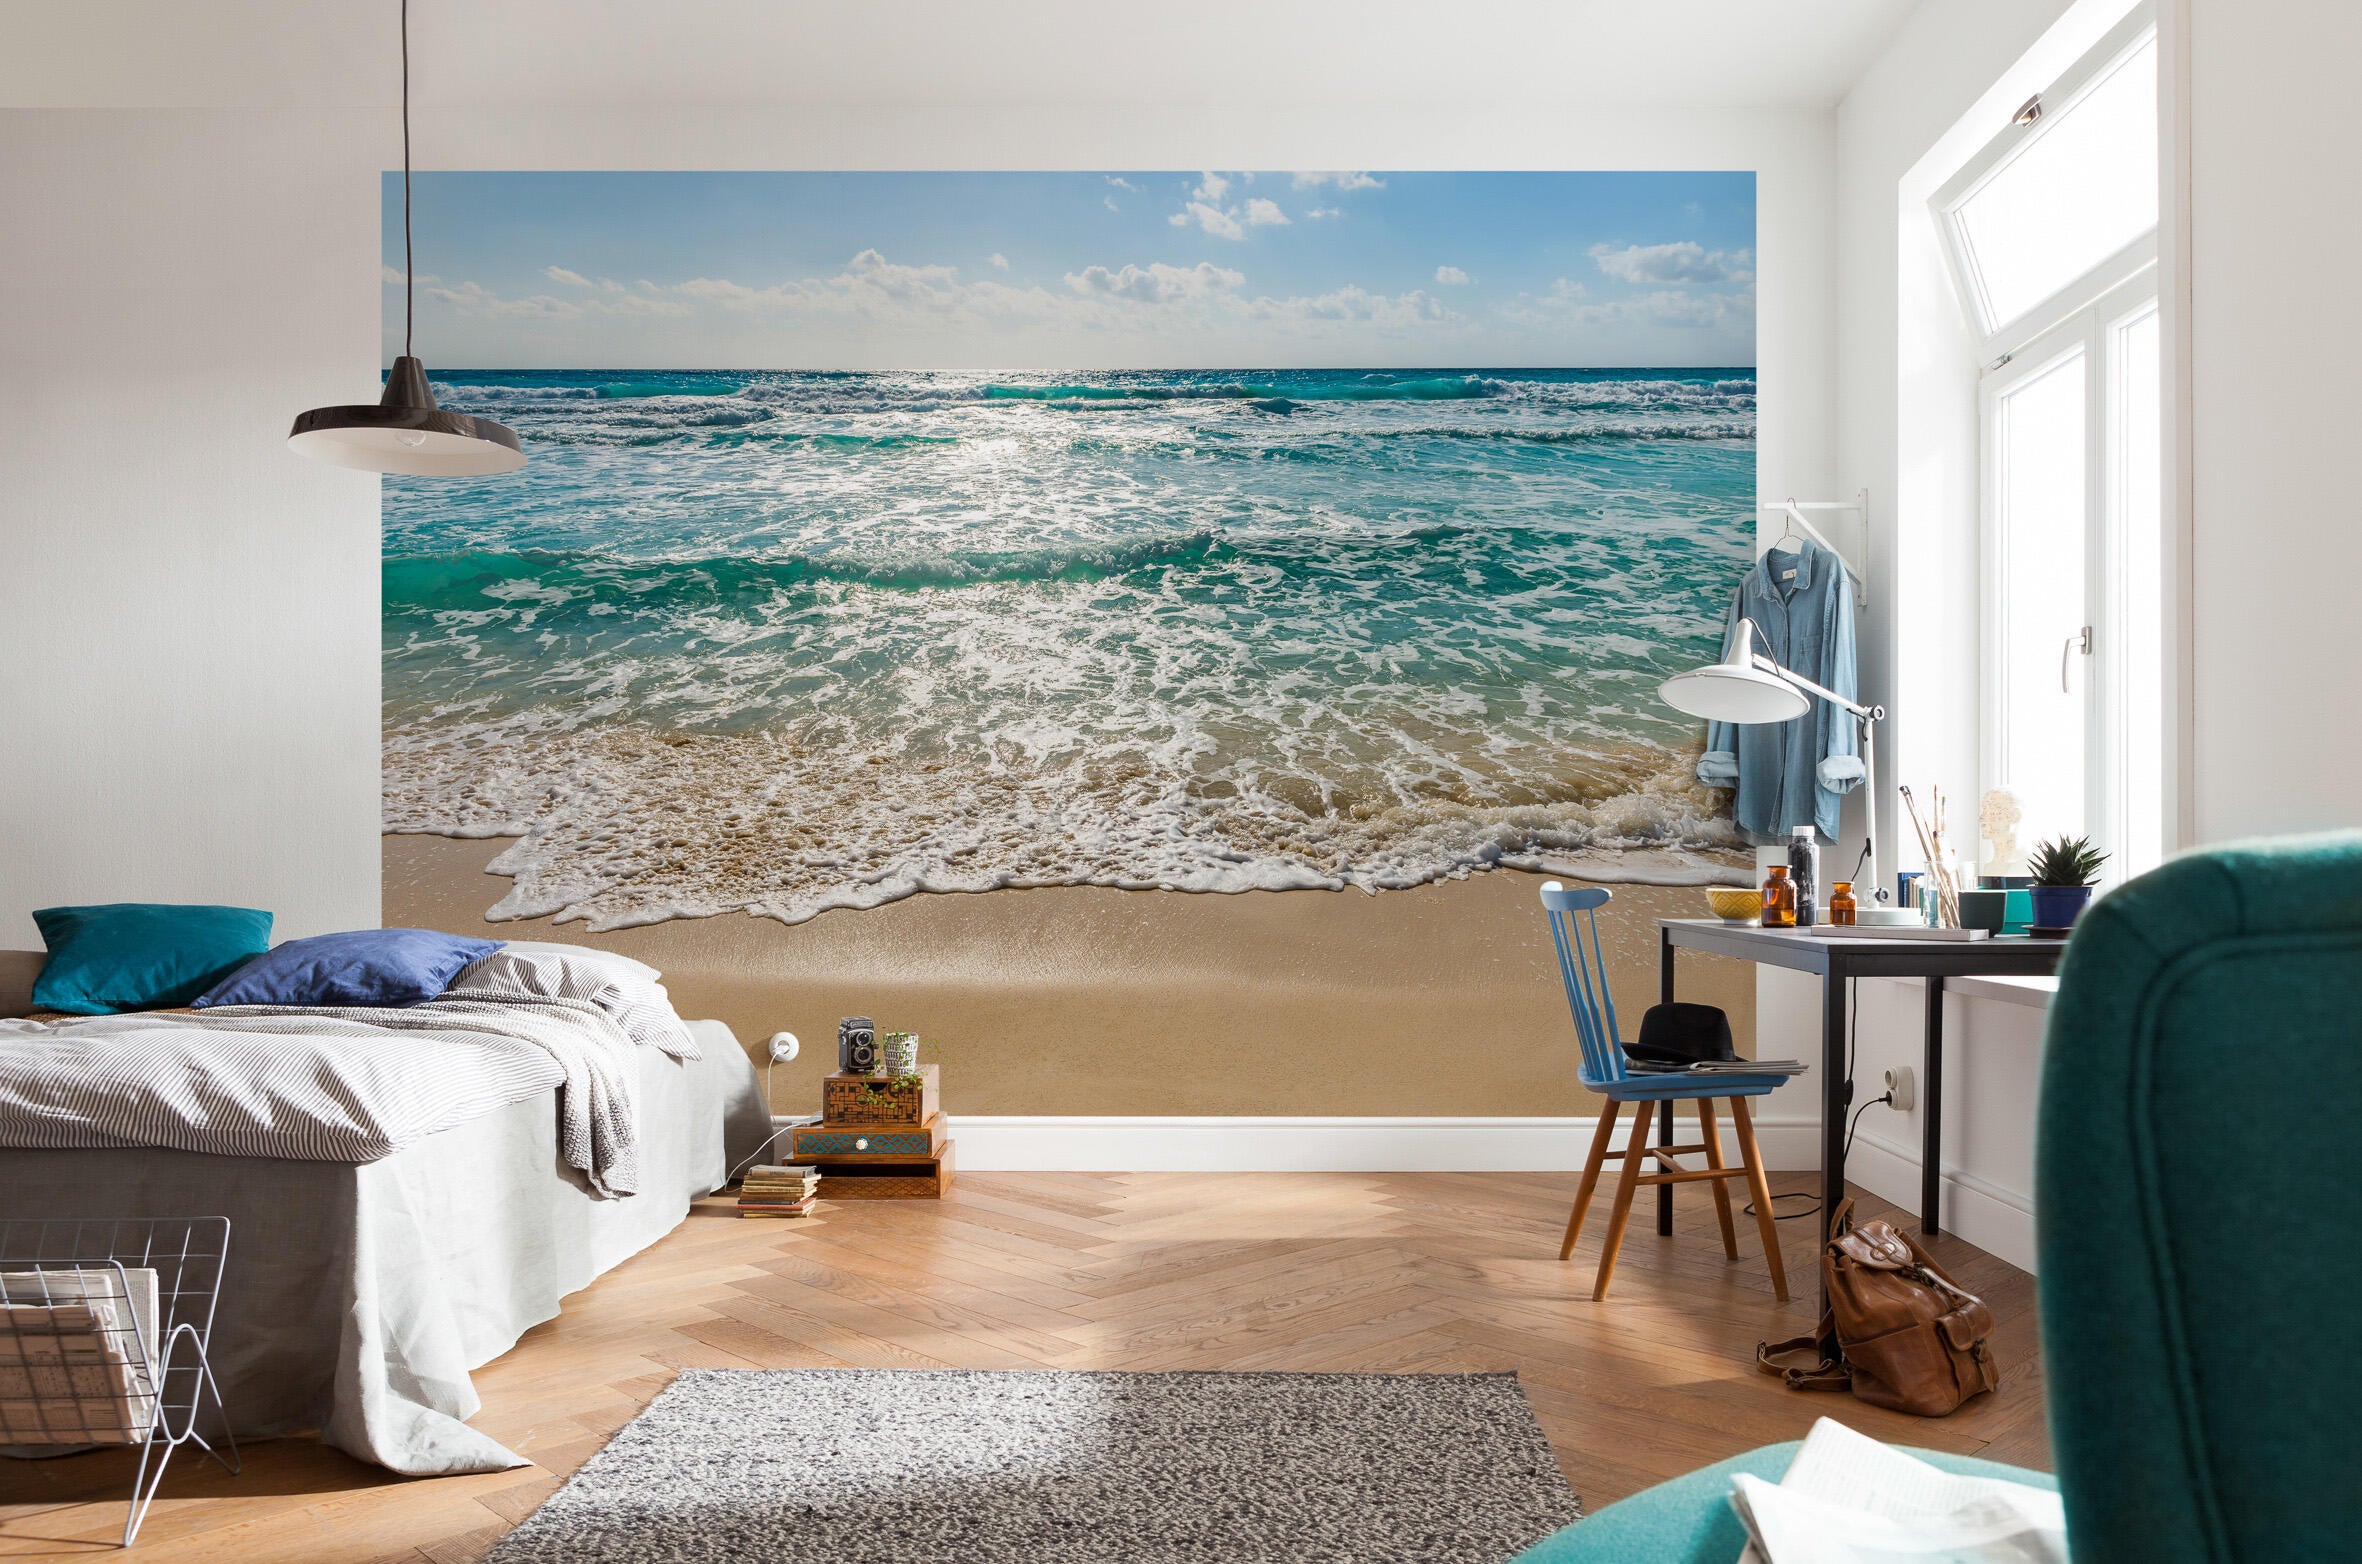 Habiller le mur de la chambre avec un poster mural de sable en bord de mer